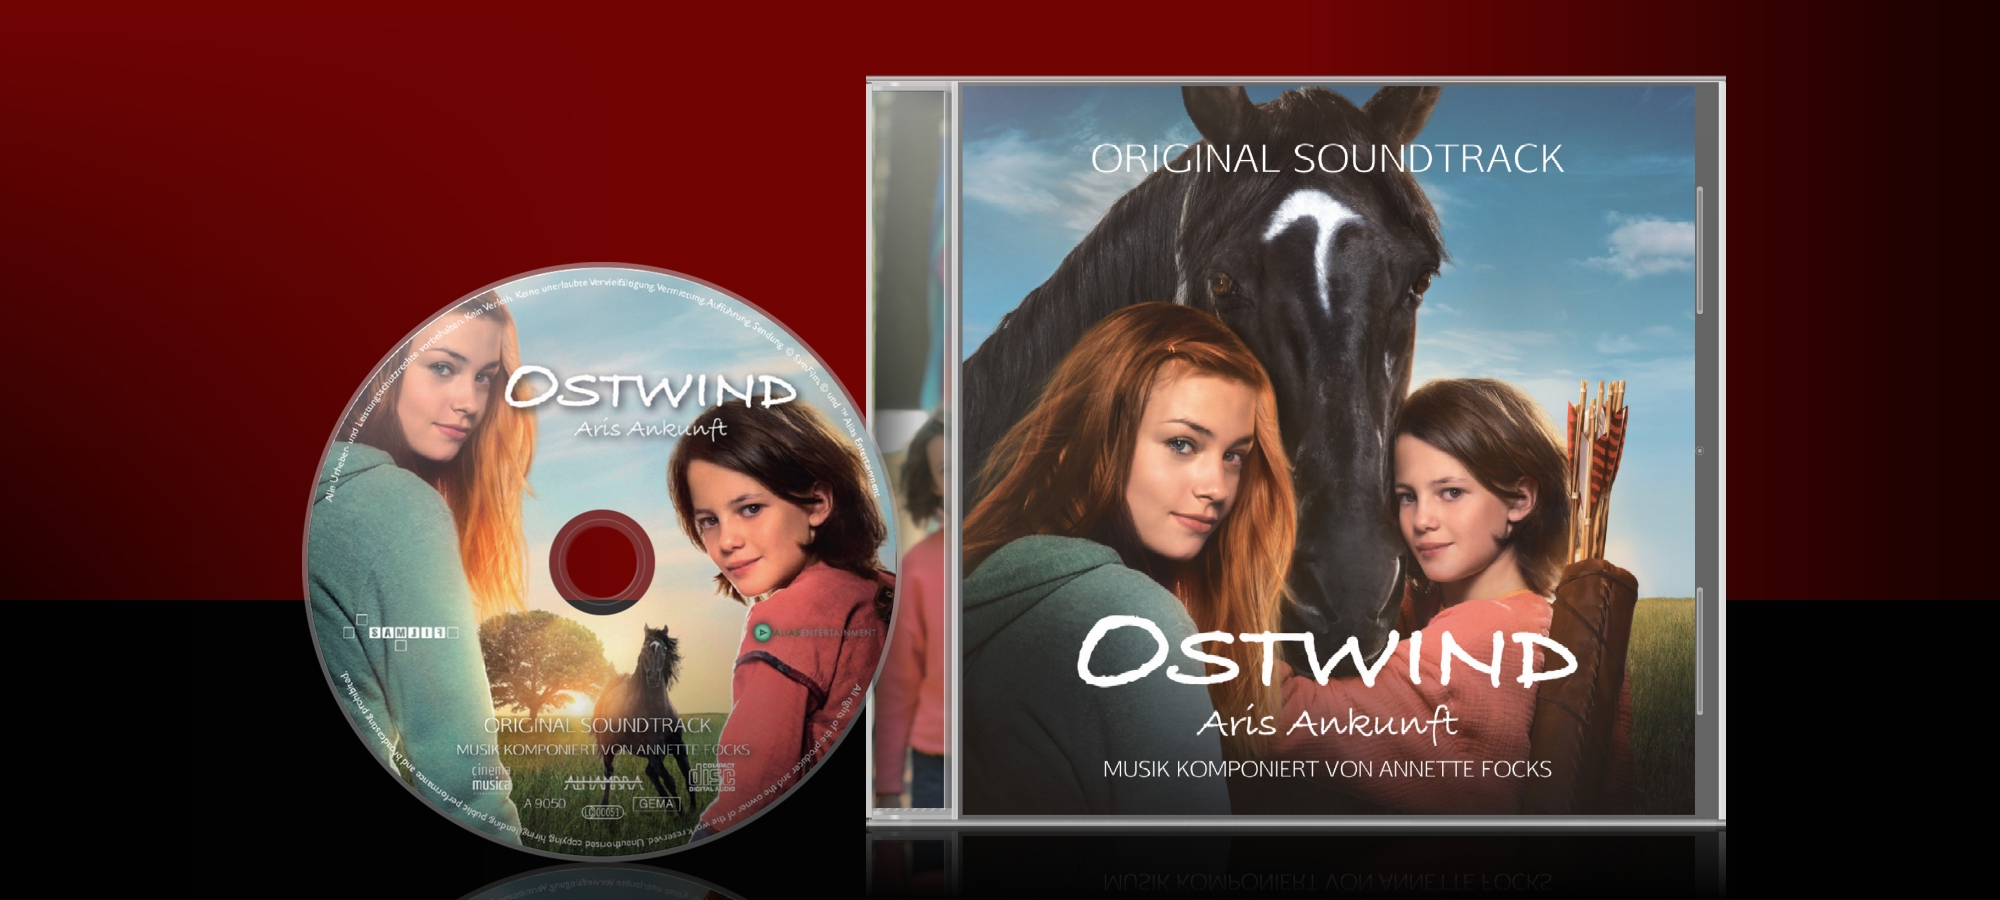 Ostwind soundtrack apple macbook pro 15 inch late 2011